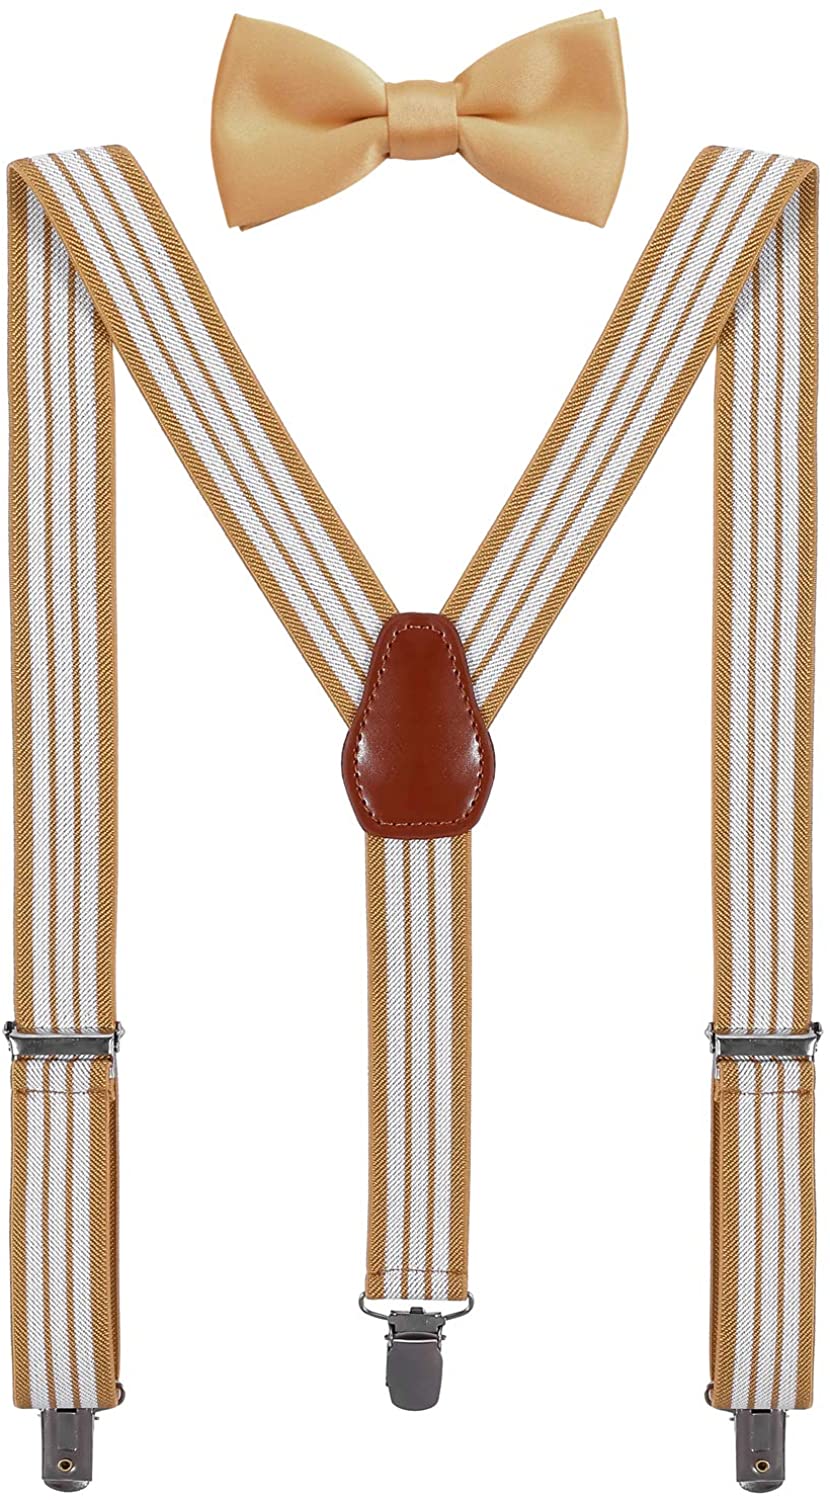 ORSKY Mens Boys Suspenders with Bow Tie Set Adjustable Y Back